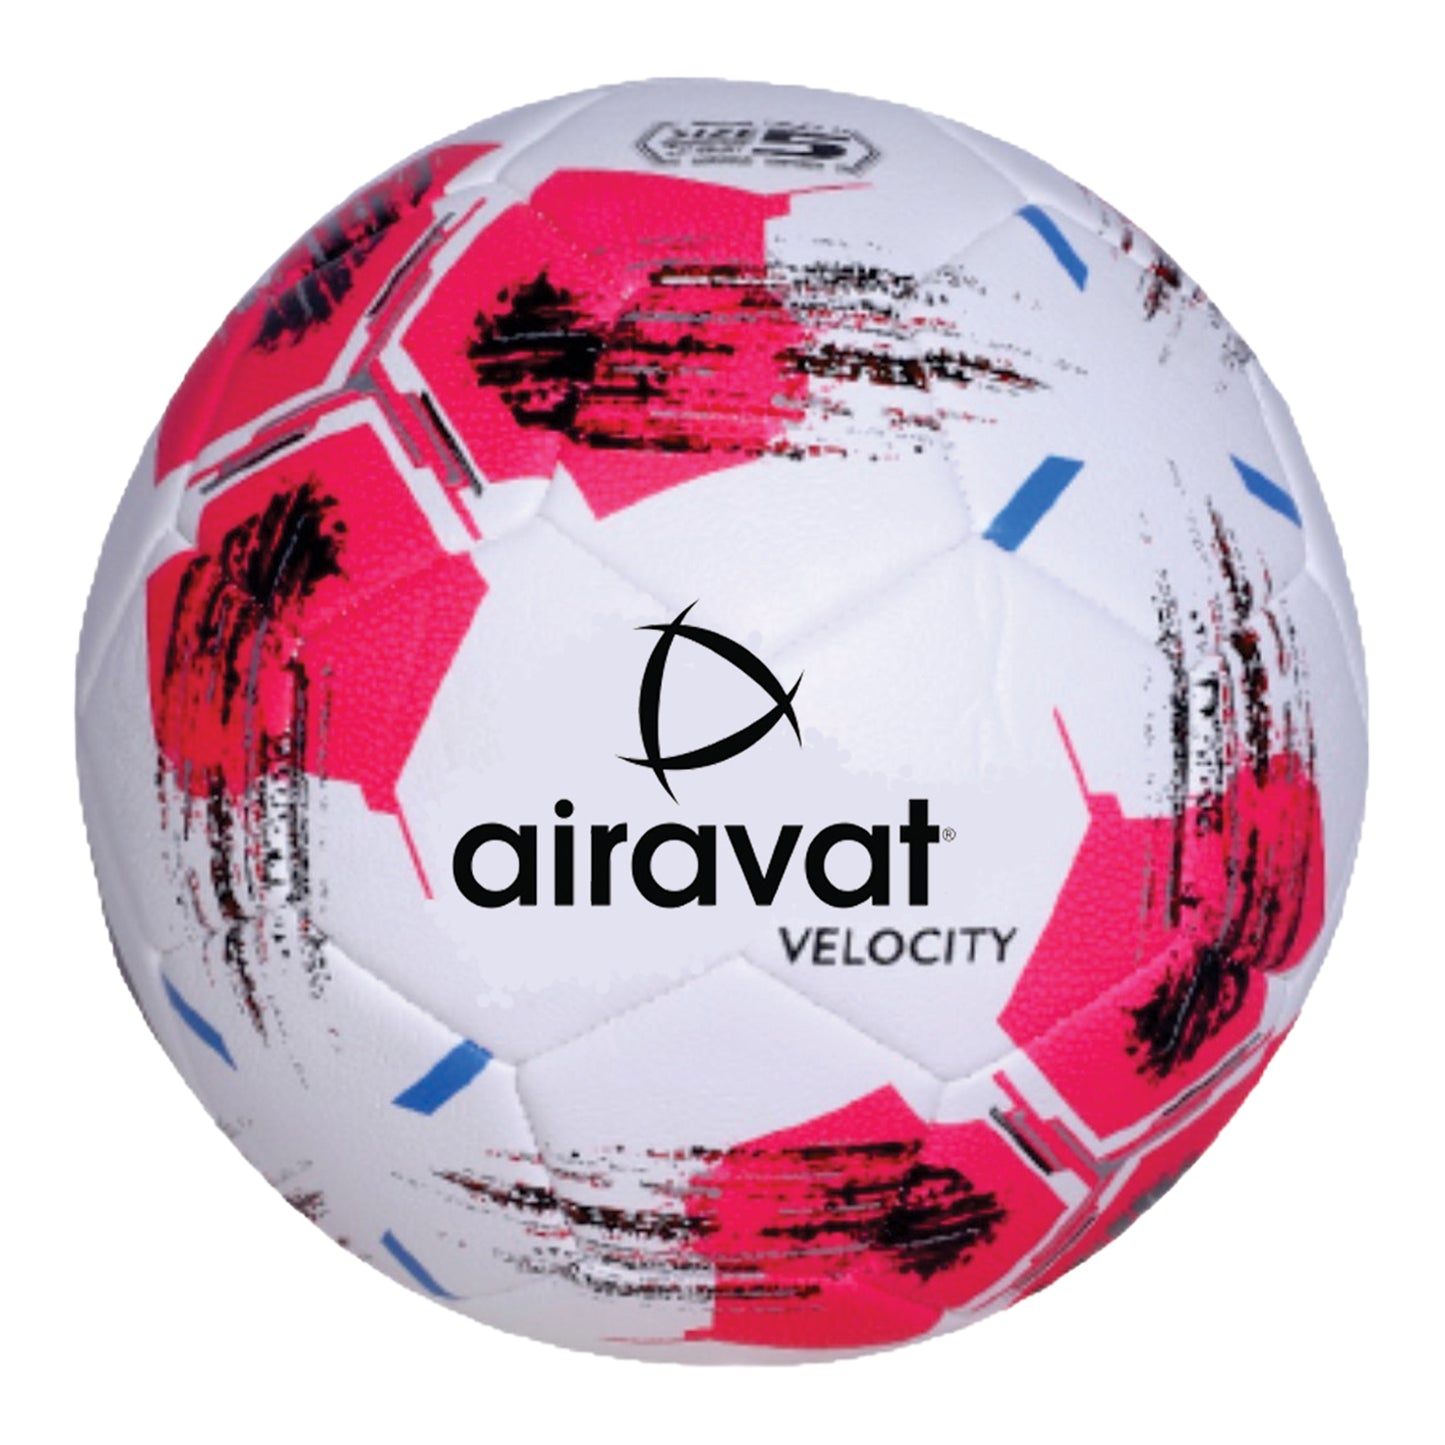 Velocity-football-ball-kipsta-main-image-pink